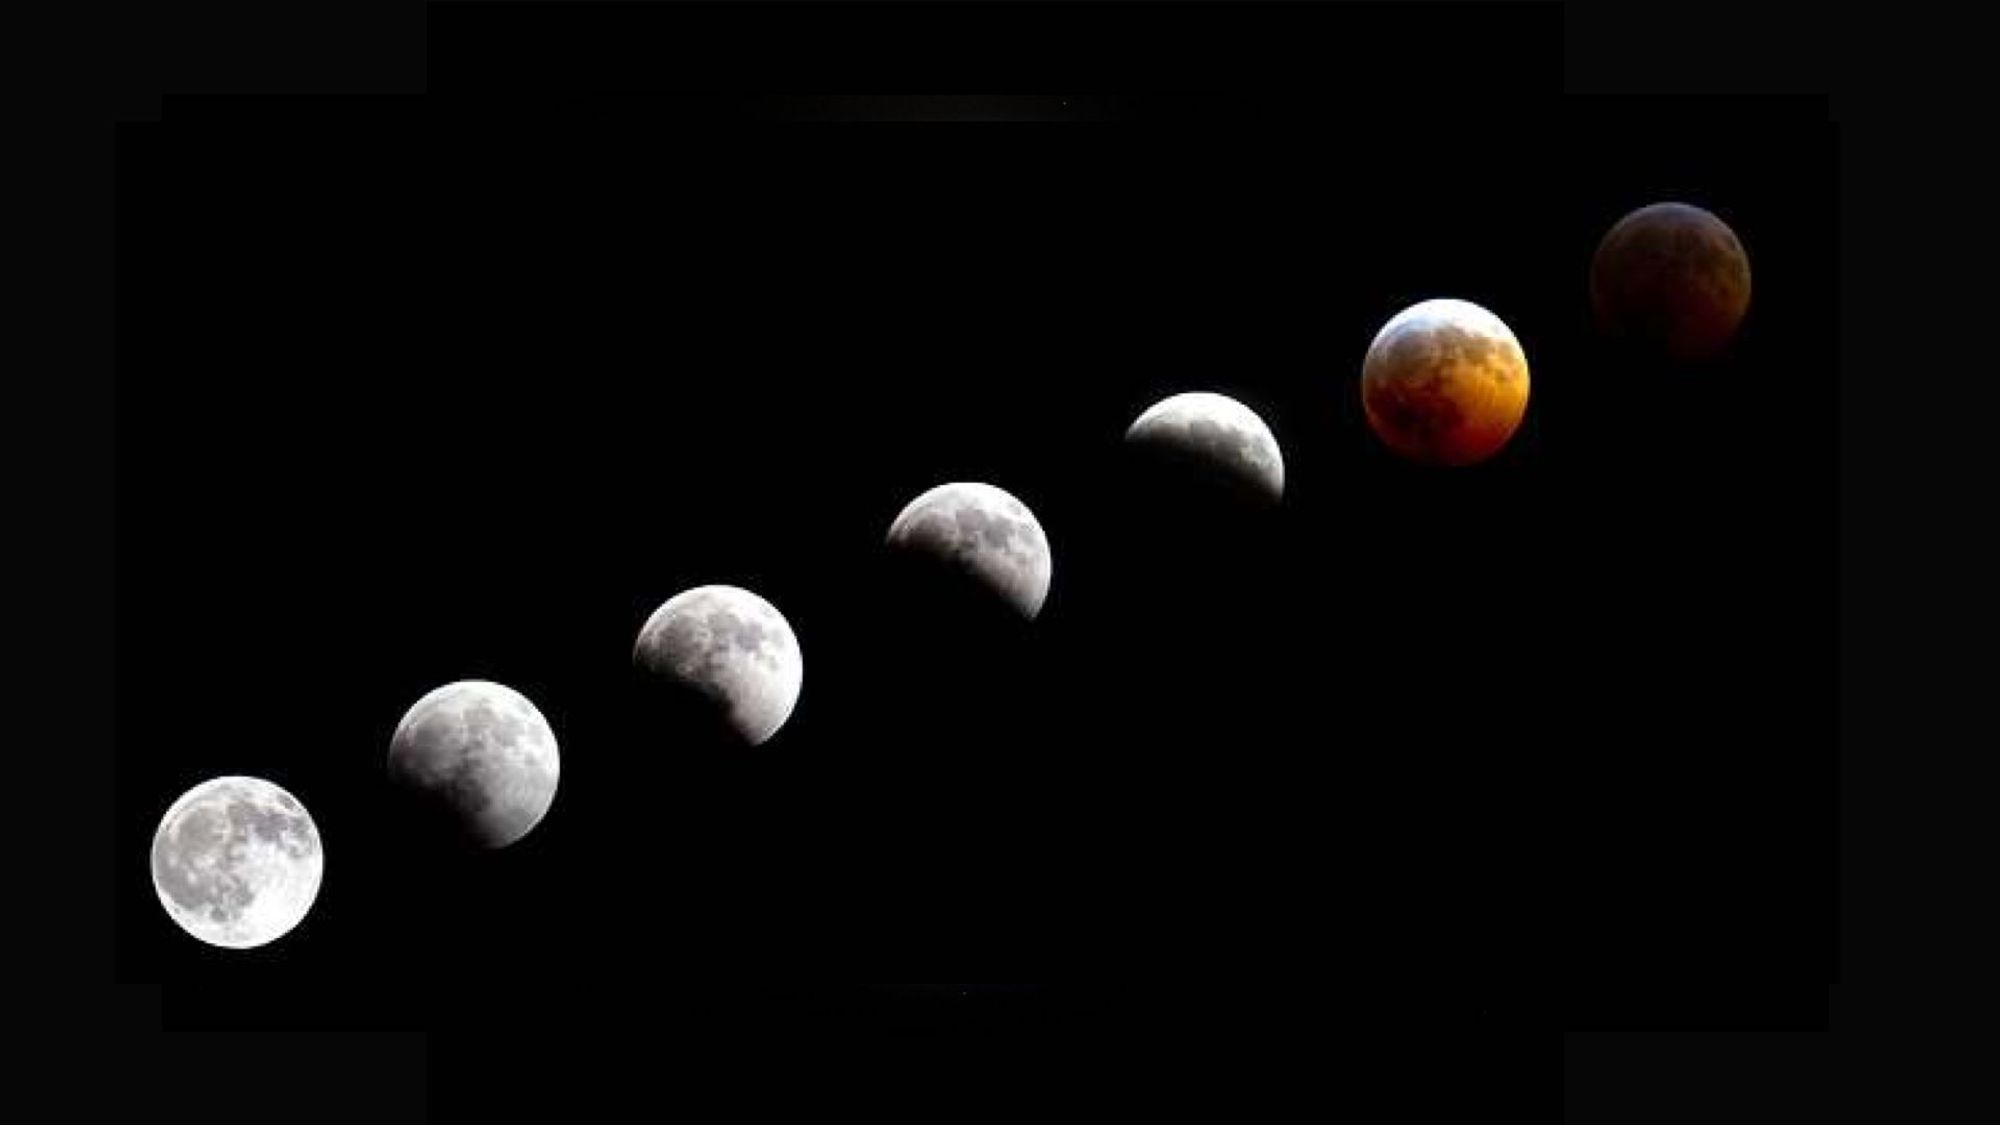 A series of lunar eclipse photos taken across two hours in Palmer, Alaska